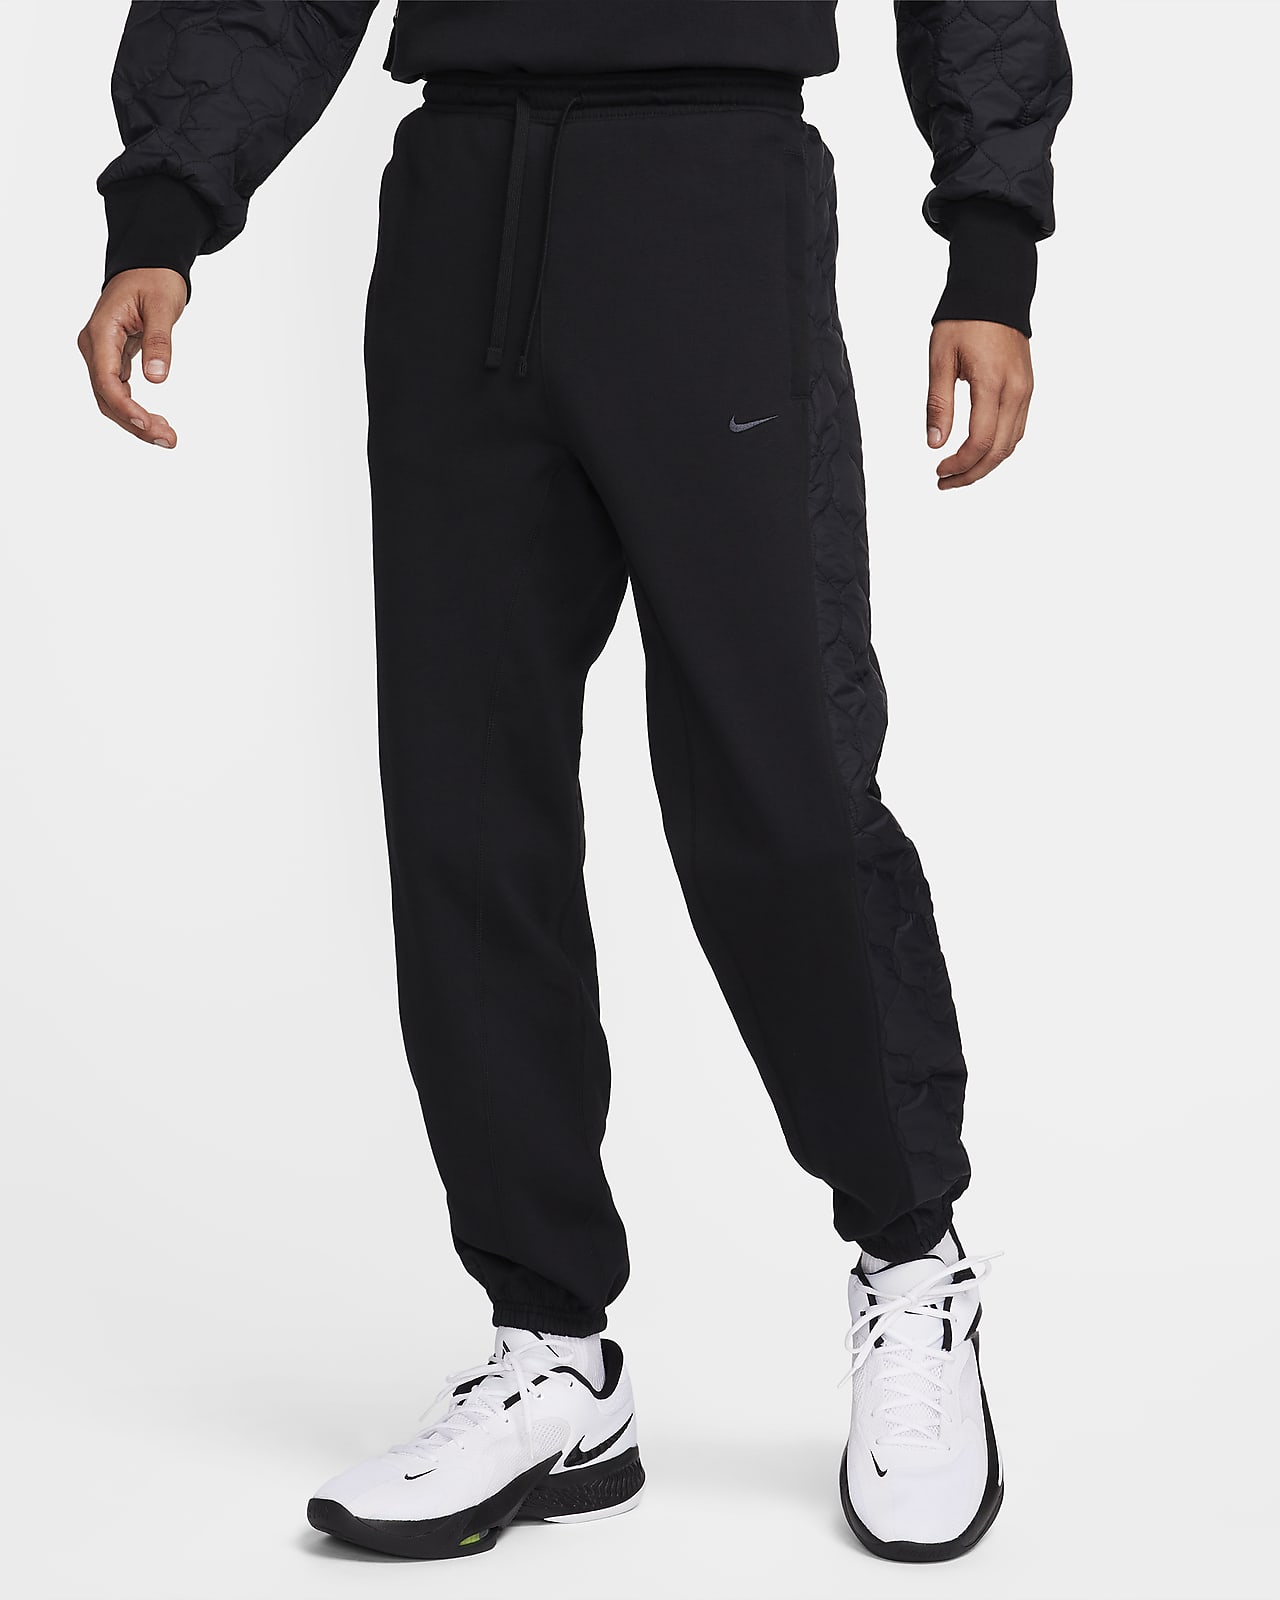 Nike Mens NBA Break A Way Basketball Warm Up Pants Black Extra